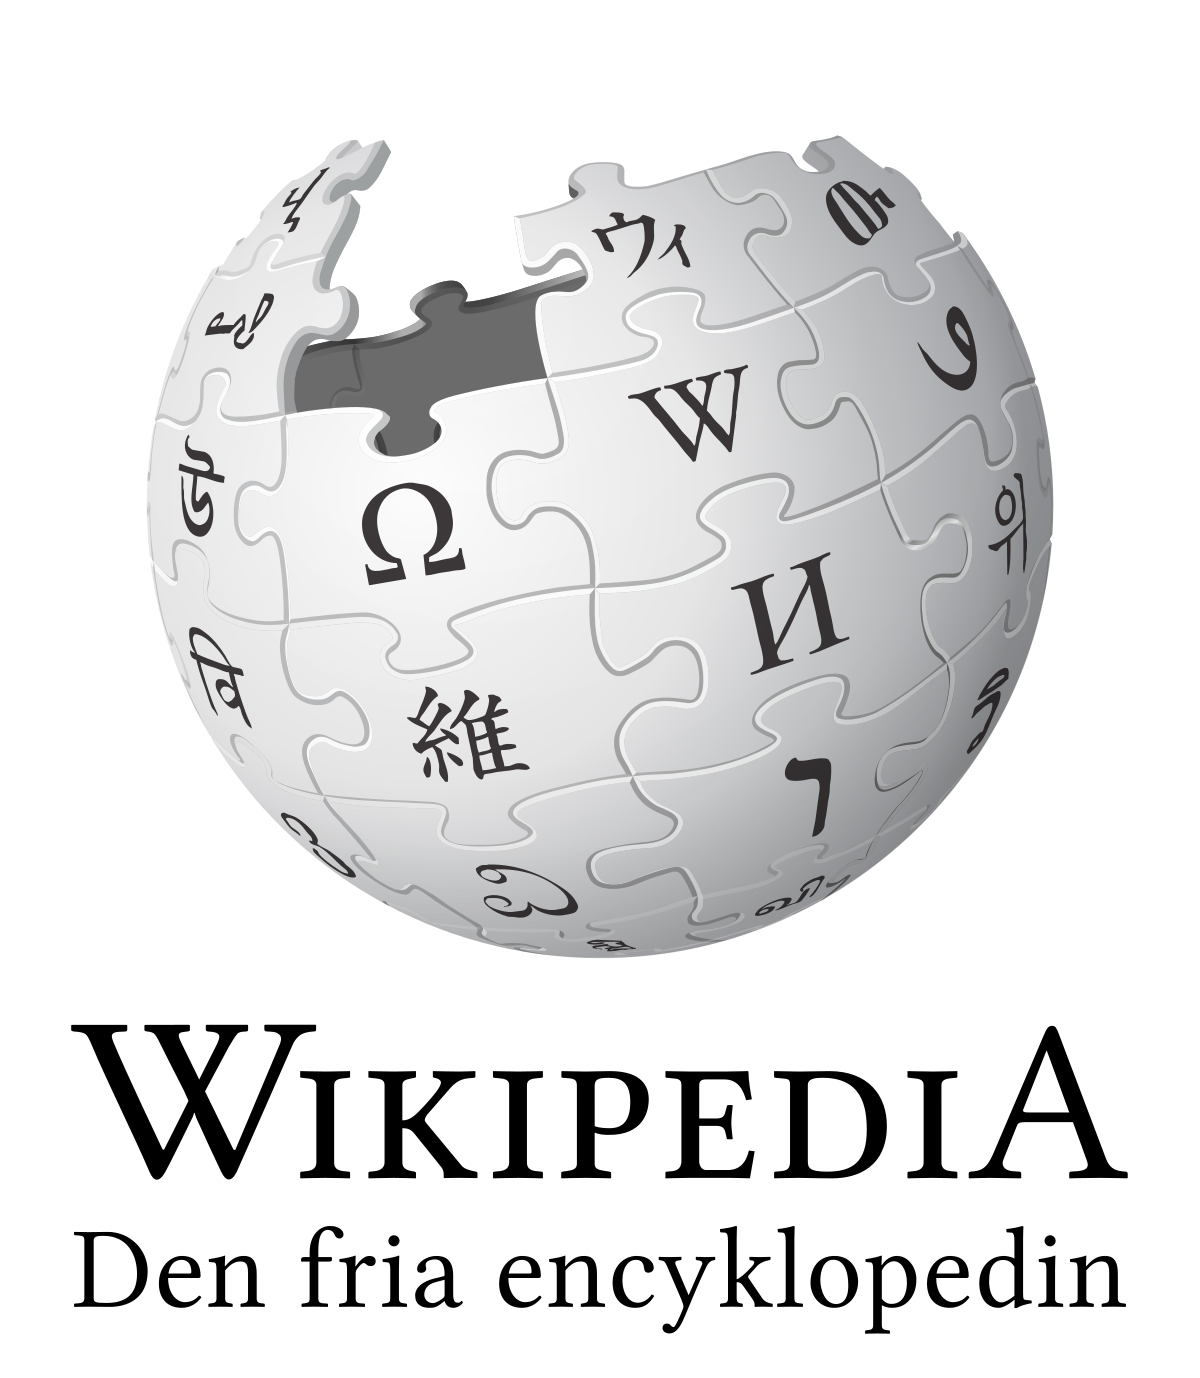 The Den - Wikipedia